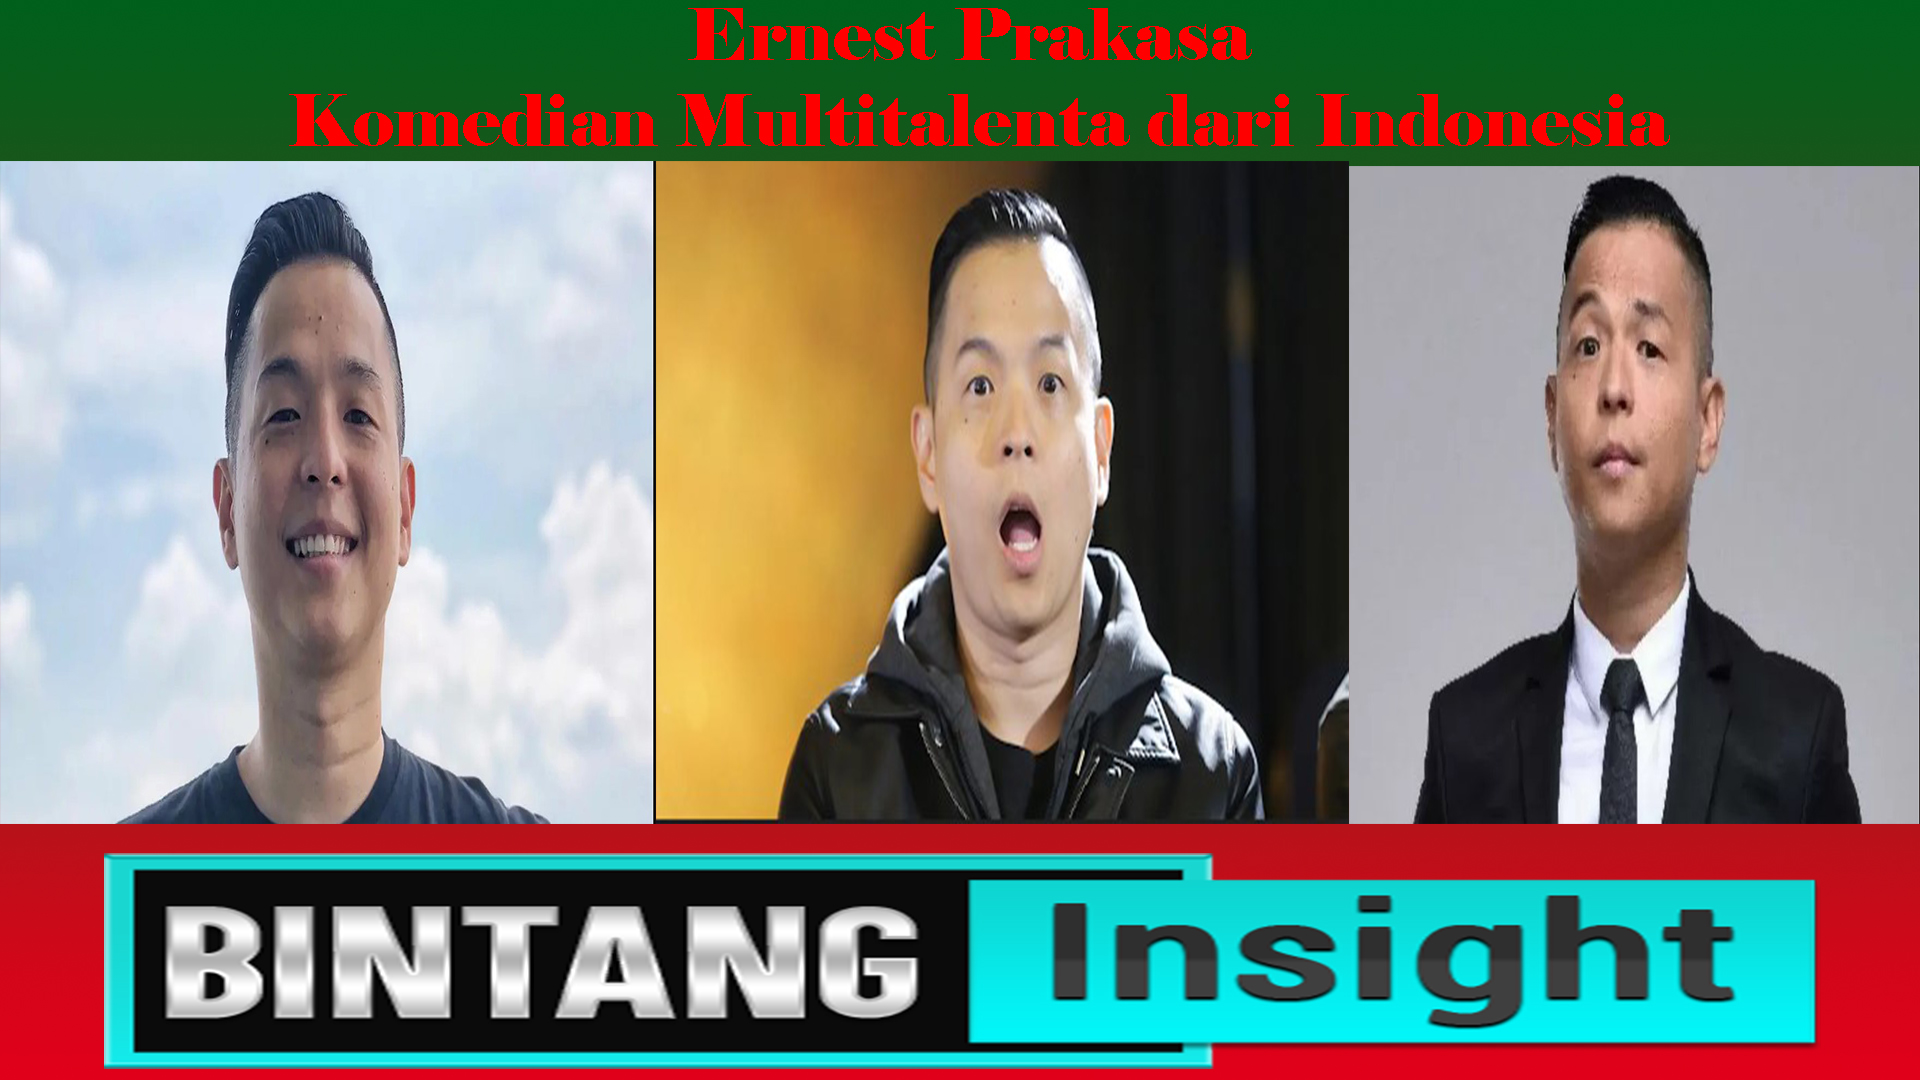 Ernest Prakasa Komedian Multitalenta dari Indonesia